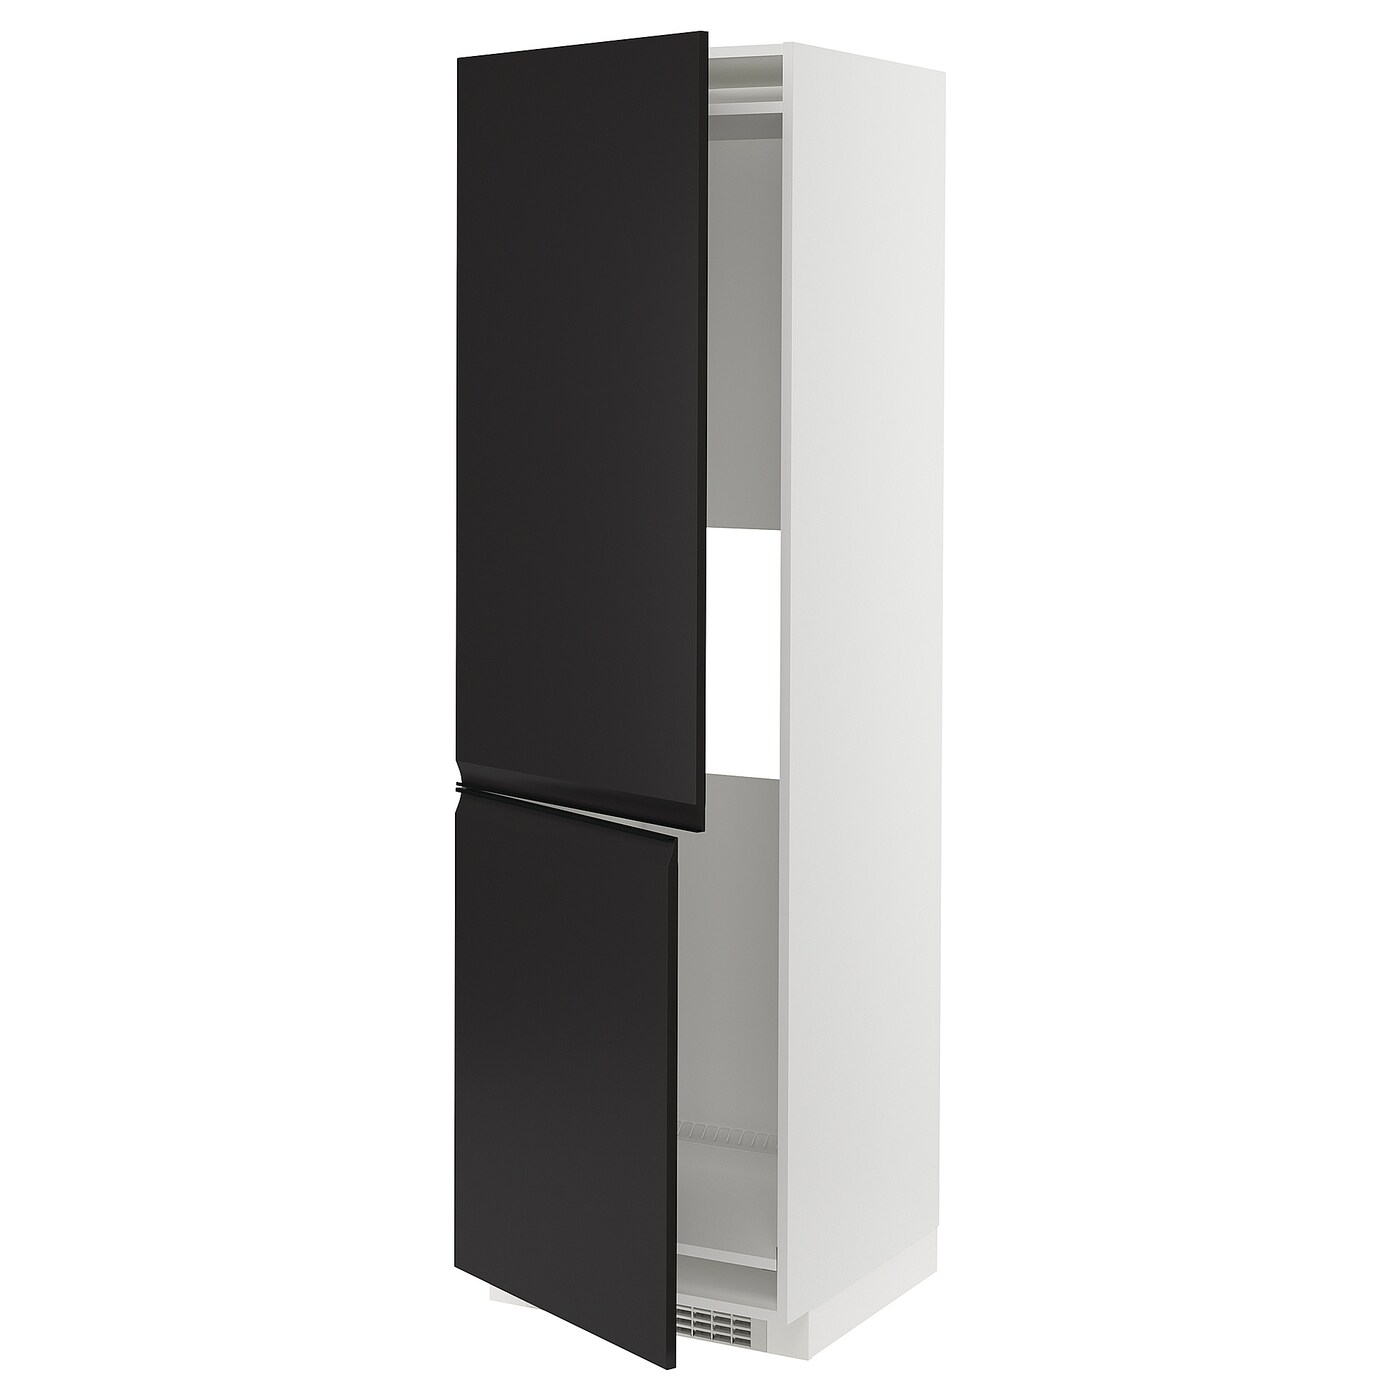 Высокий кухонный шкаф - IKEA METOD/МЕТОД ИКЕА, 200х60х60 см, черный/белый